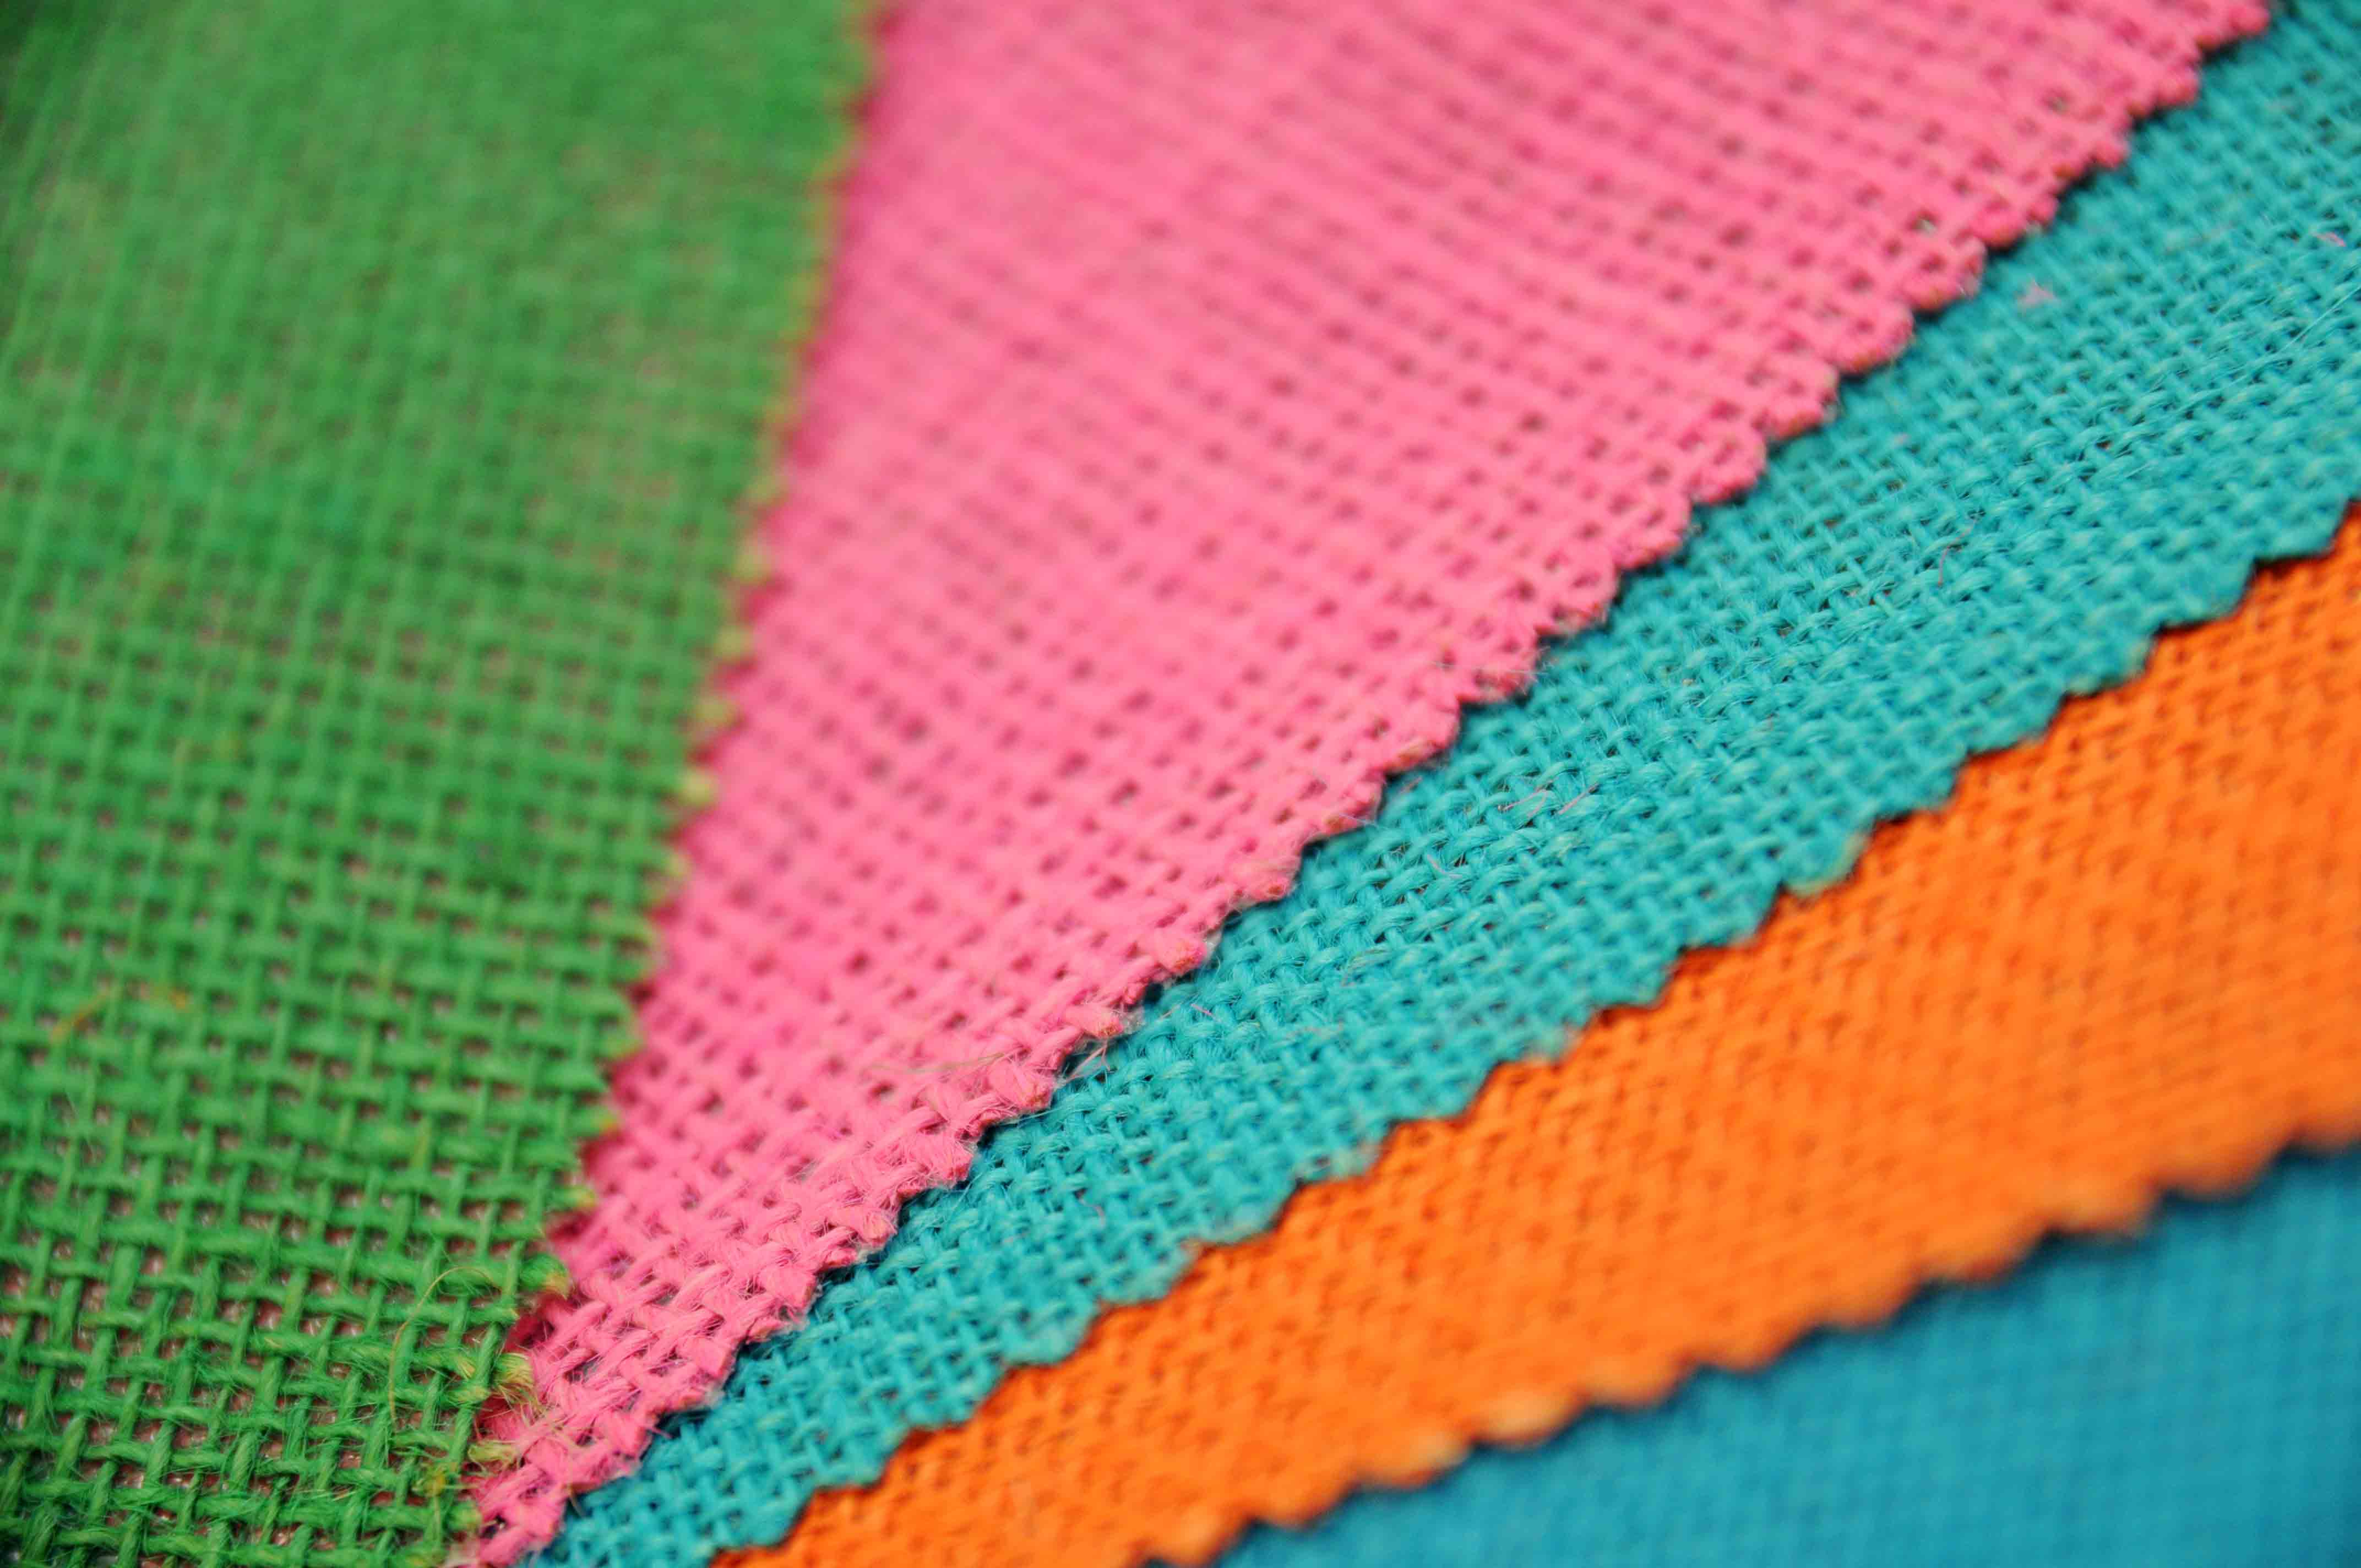 Laminated Hessian Fabric free fabric samples available - Fabric Blog